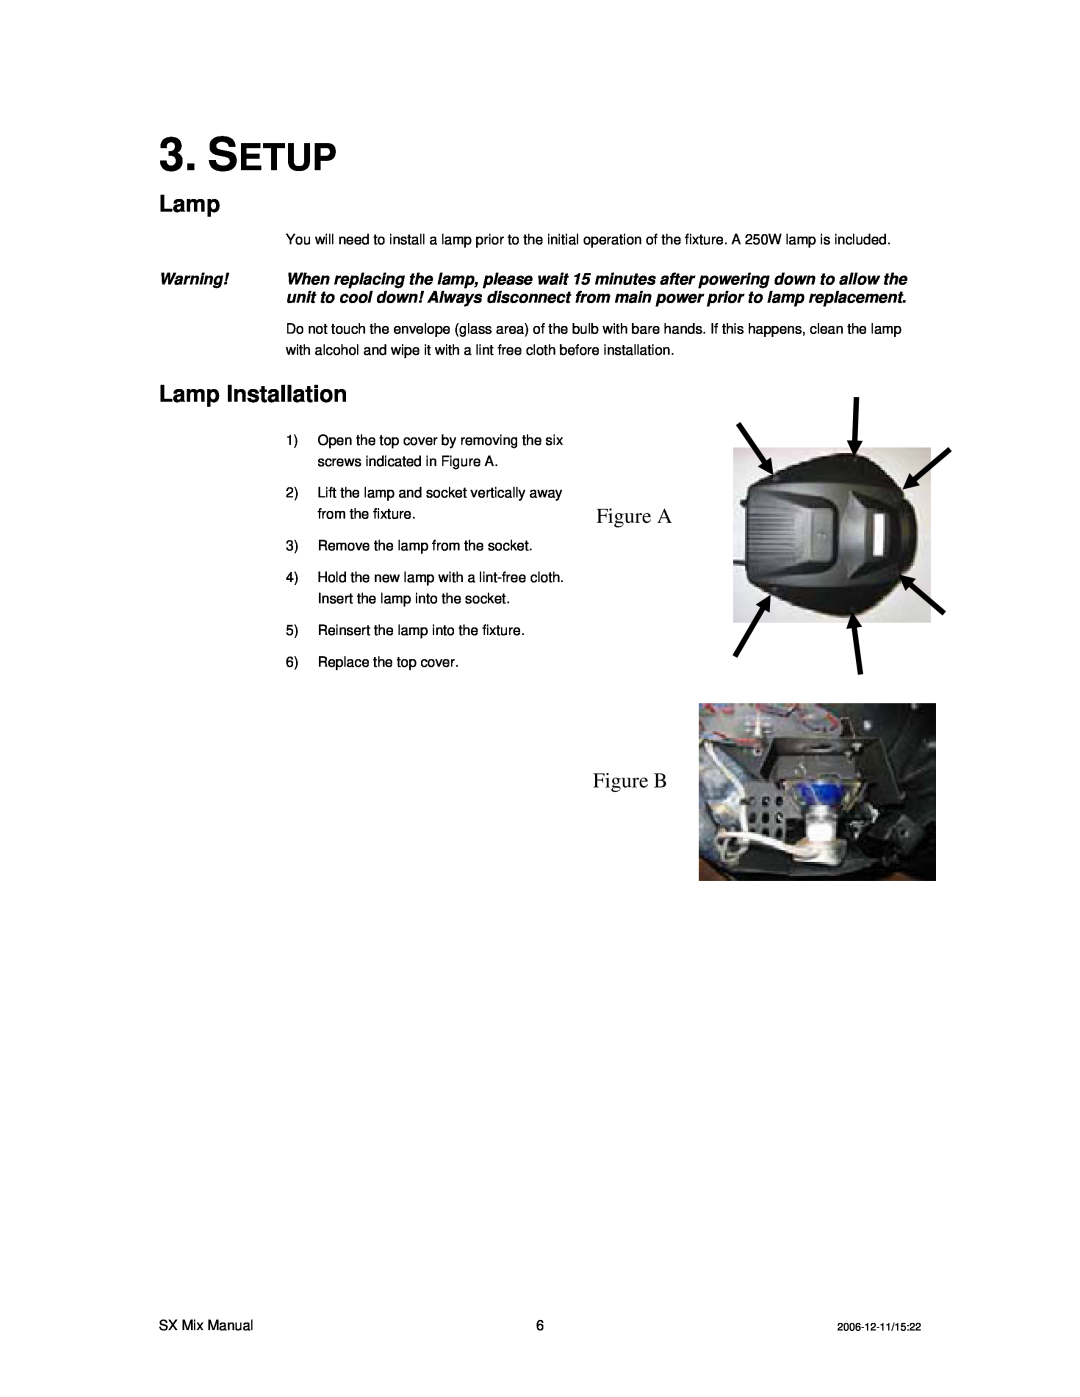 Chauvet DMX512 user manual Setup, Lamp Installation, Figure A, Figure B 